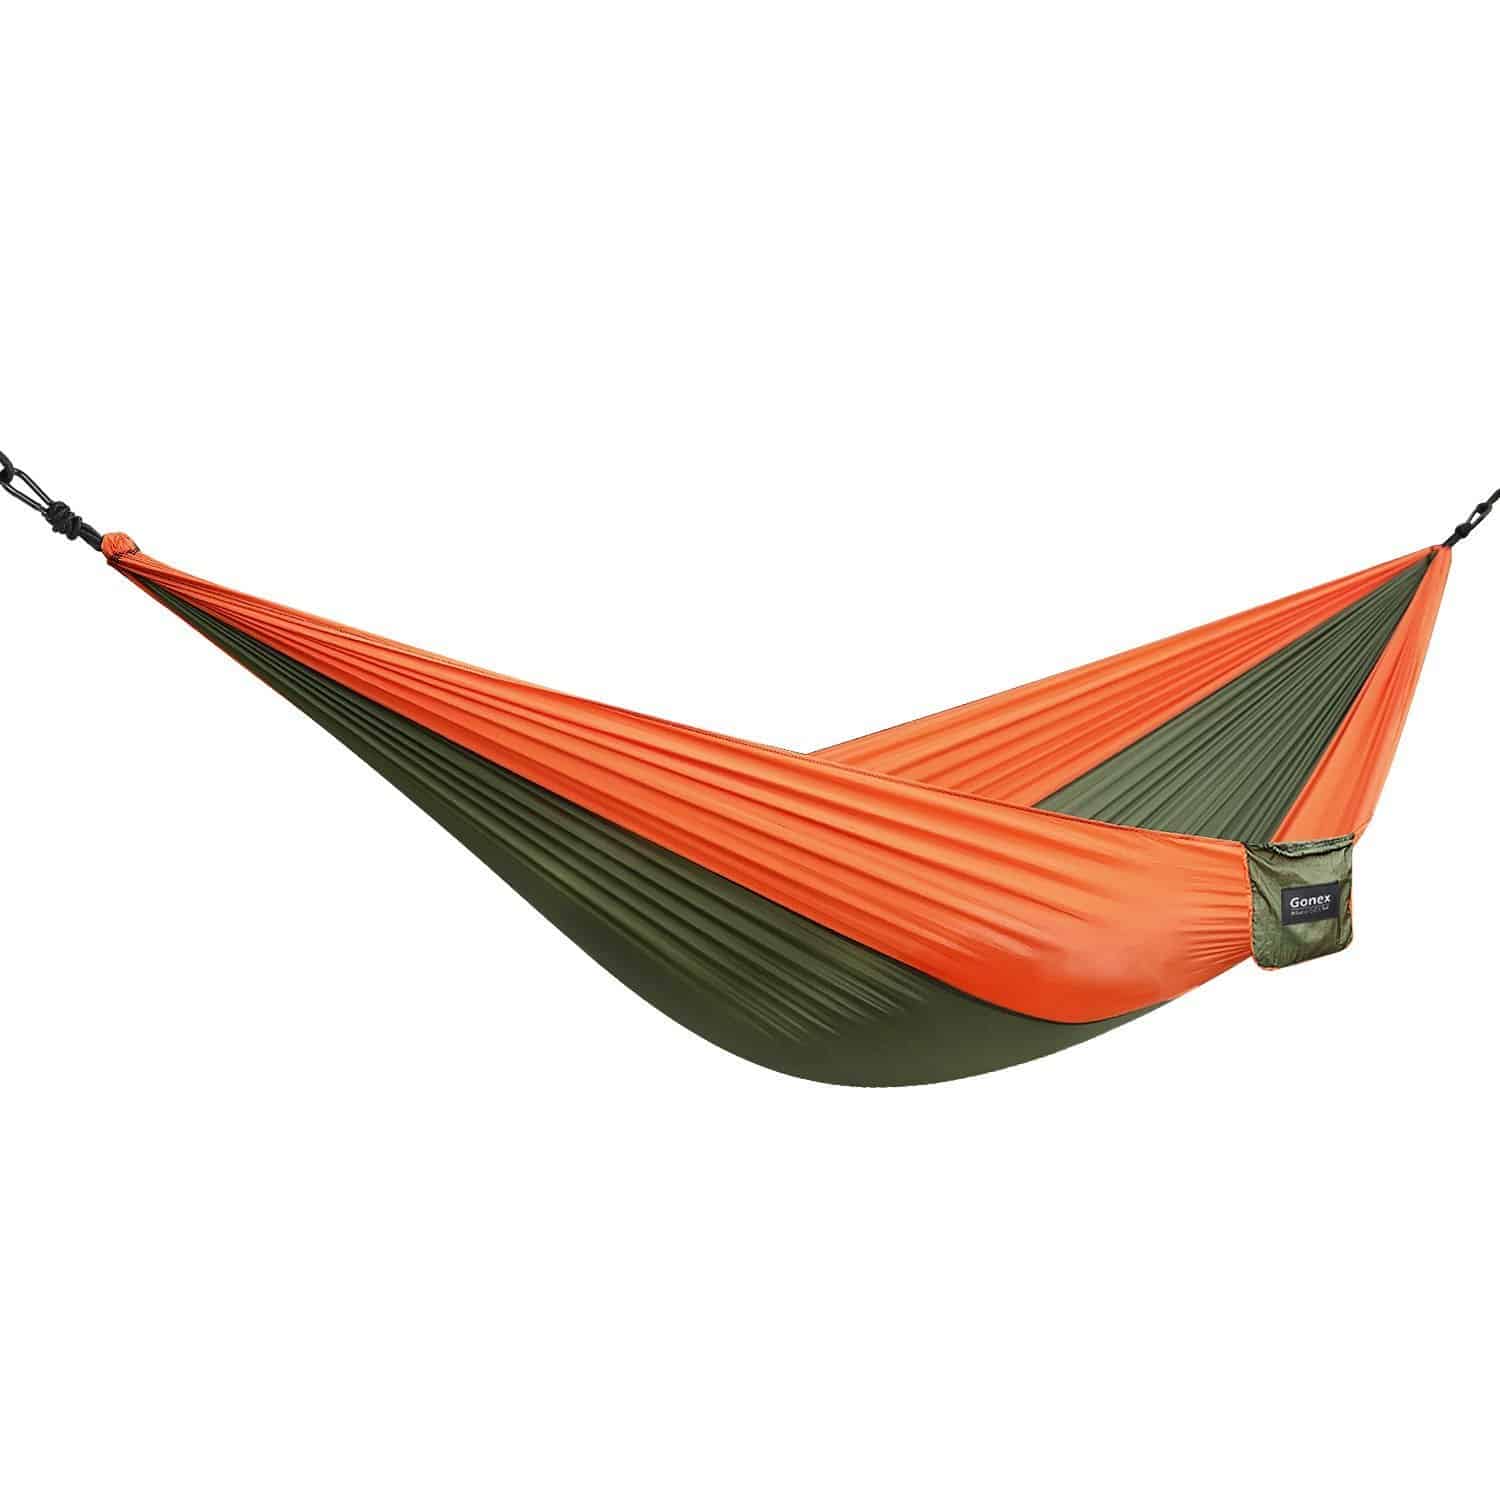 LIGHTNING DEAL ALERT! Parachute Nylon Fabric Ourdoor Camping Hammock – 67% off!